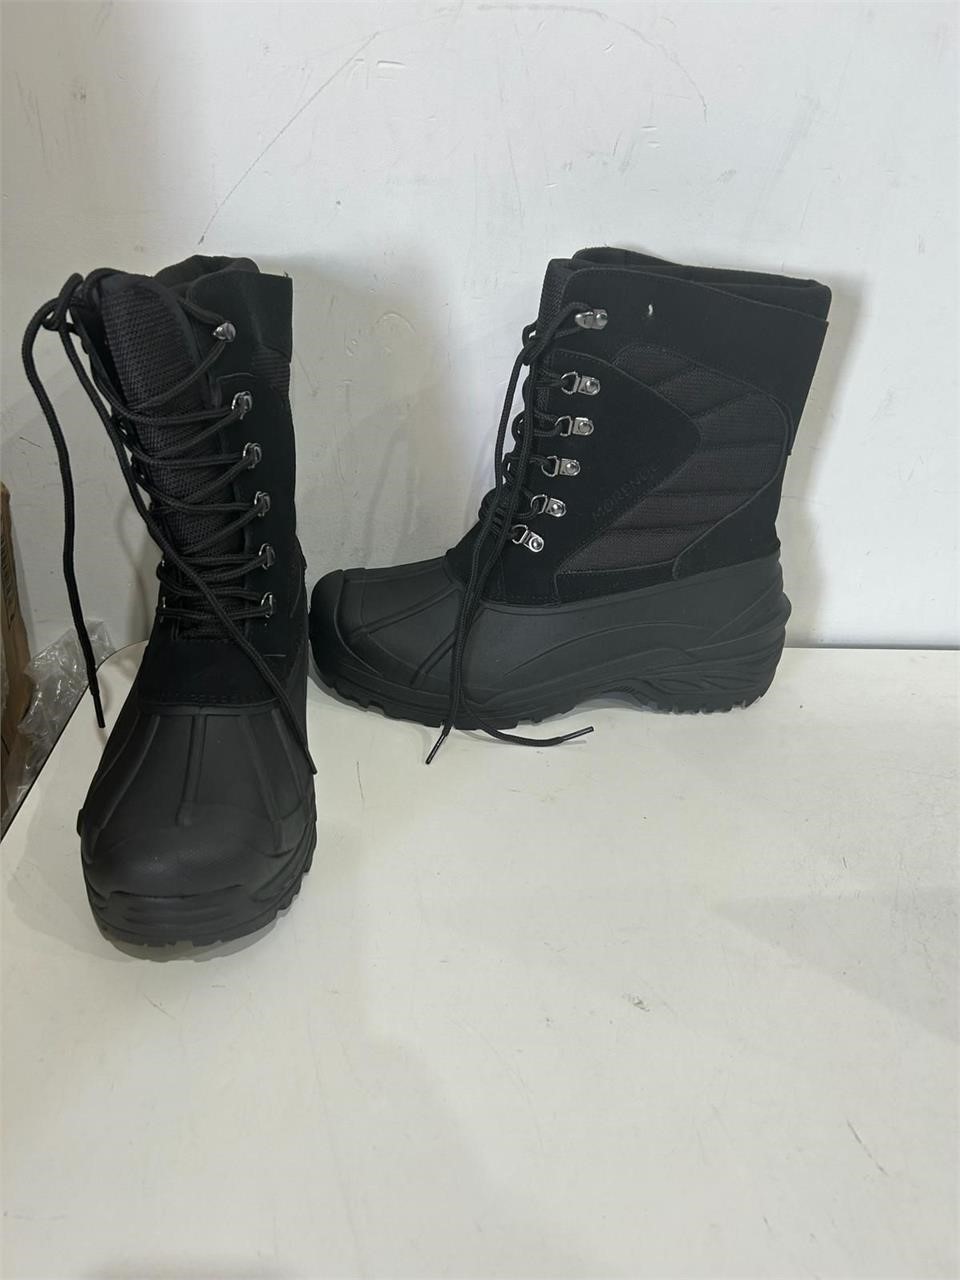 New $80 Men’s Snow Boots 12M Black